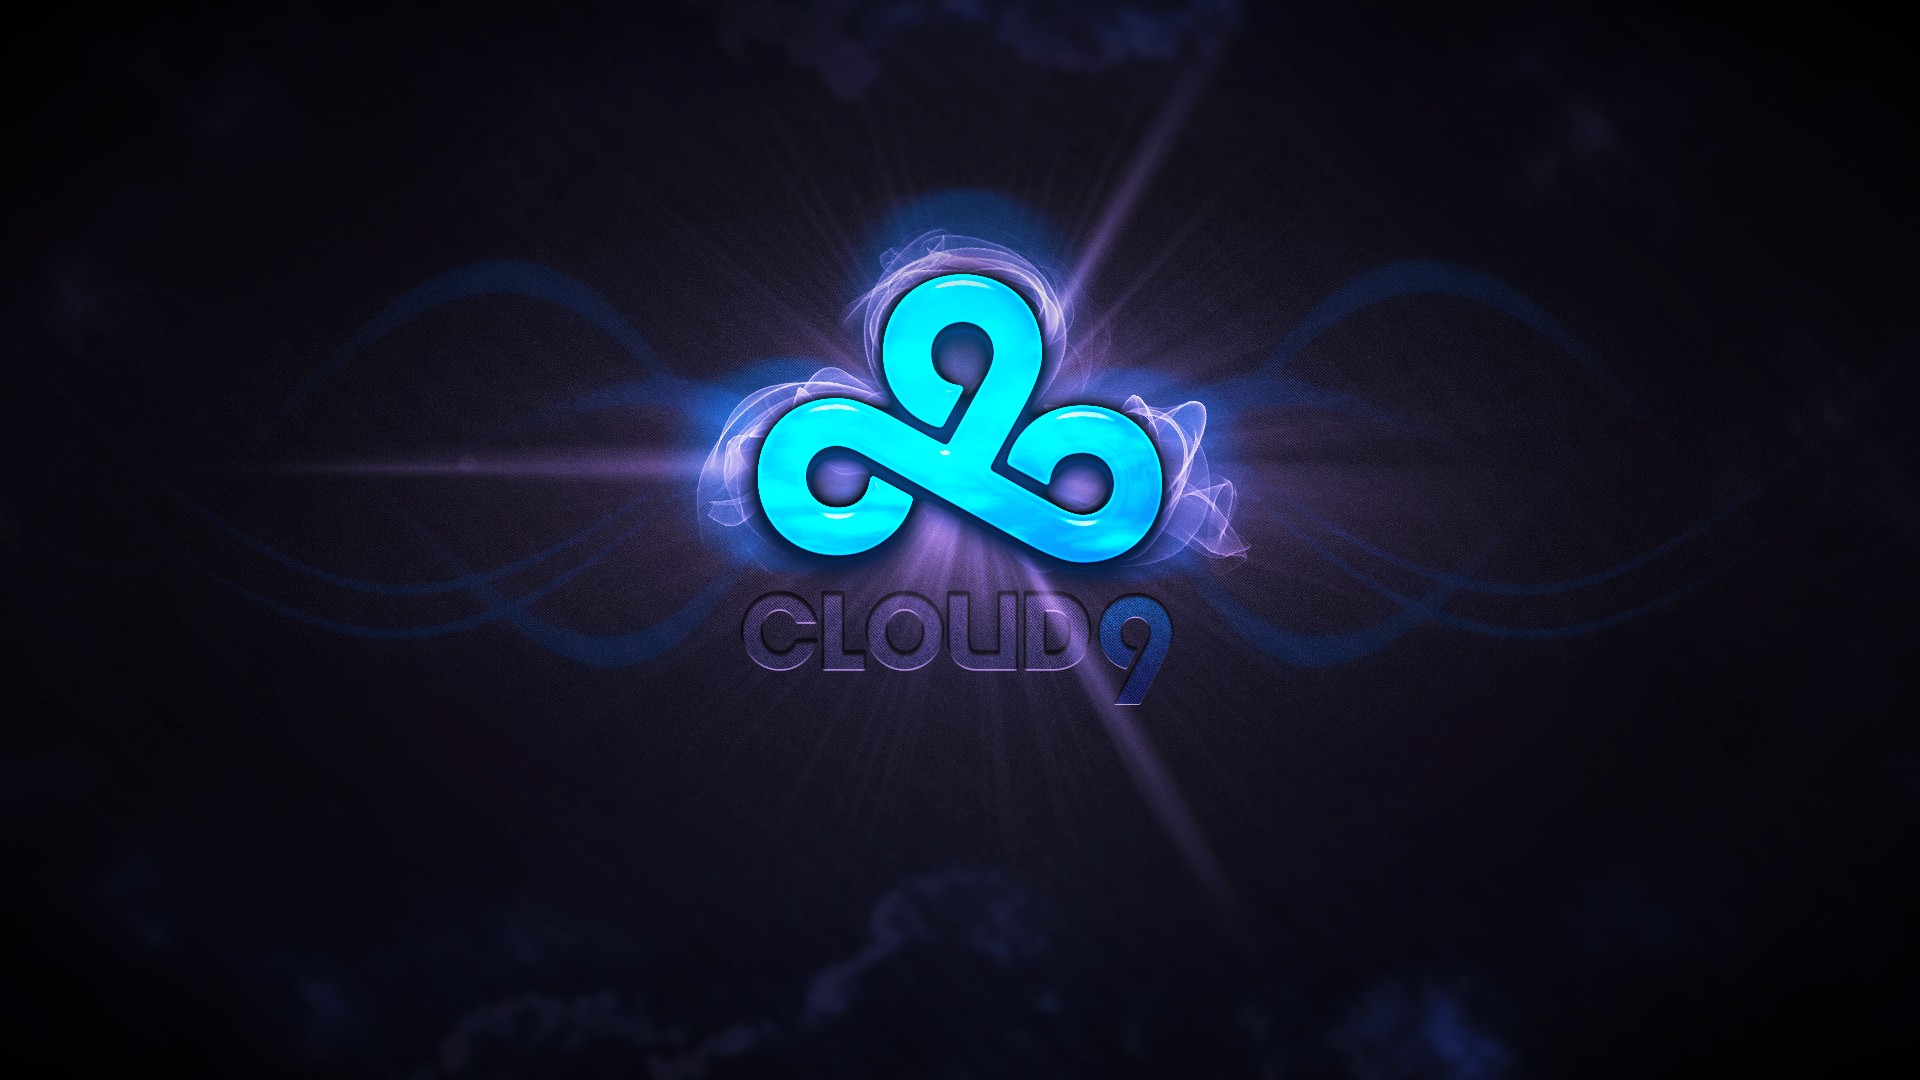 Cloud9 Desktop Wallpaper